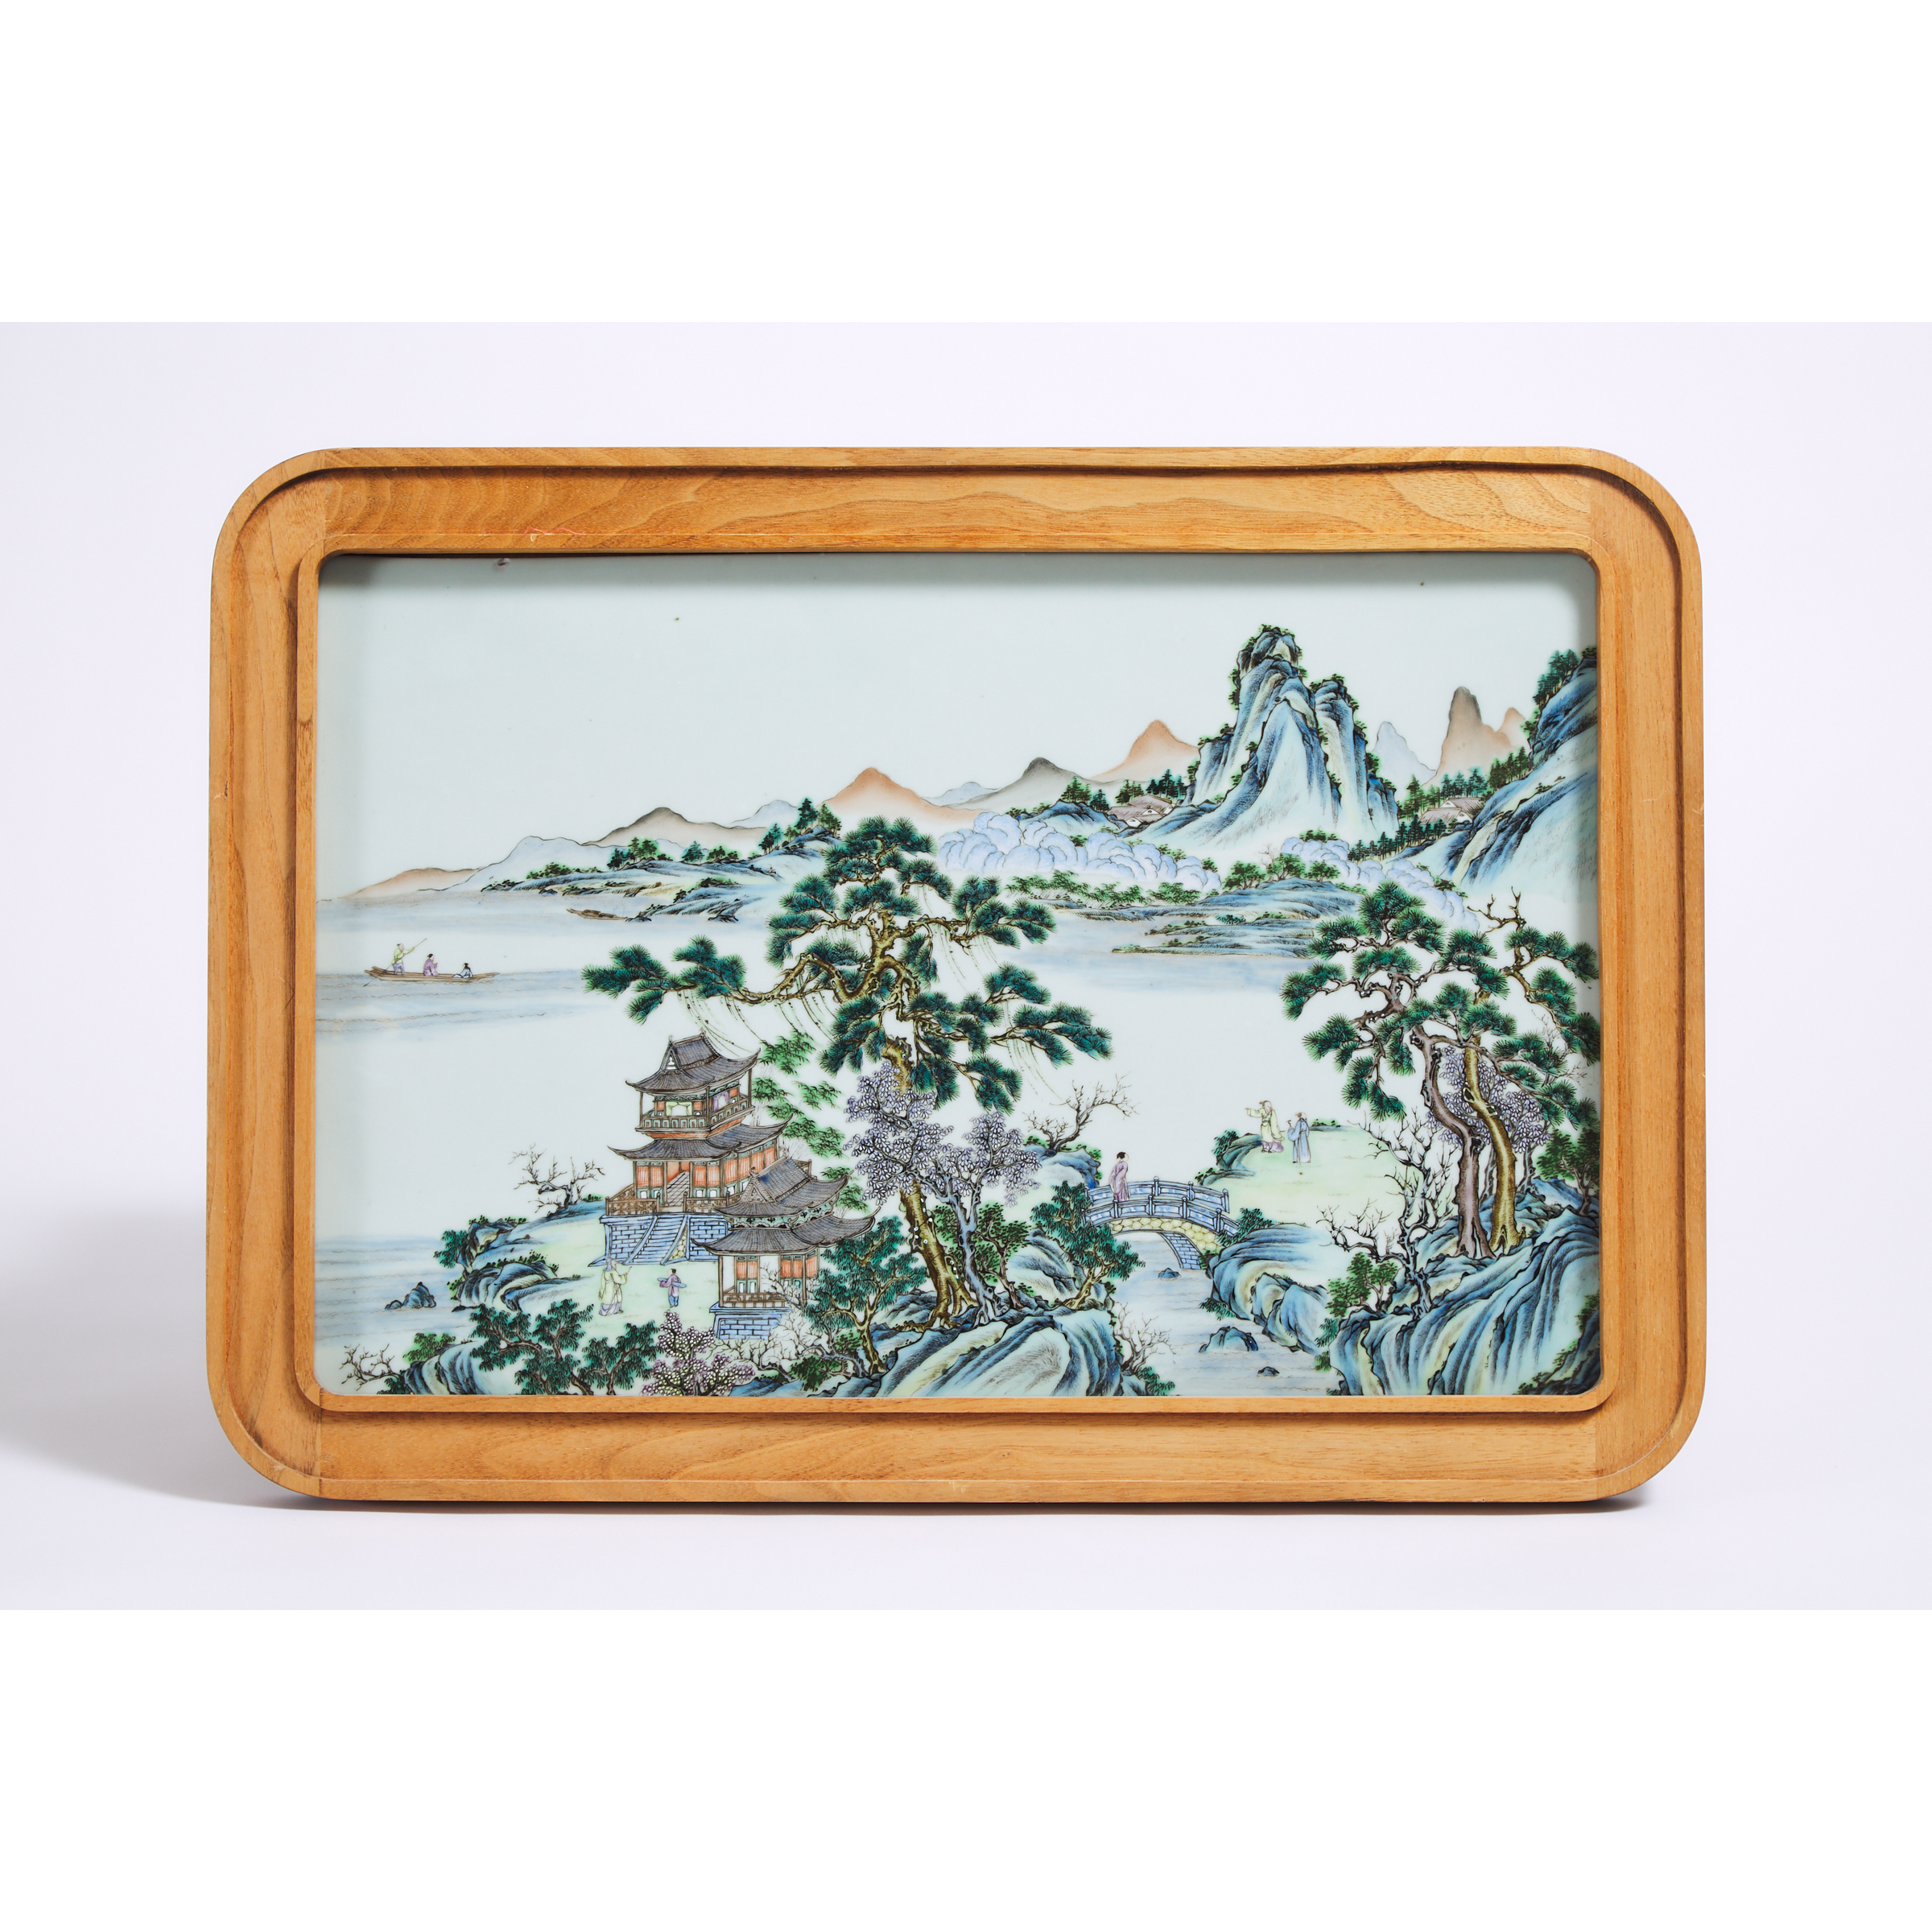 A Set of Four Famille Rose Porcelain 'Landscape' Panels, Late Qing/Republican Period